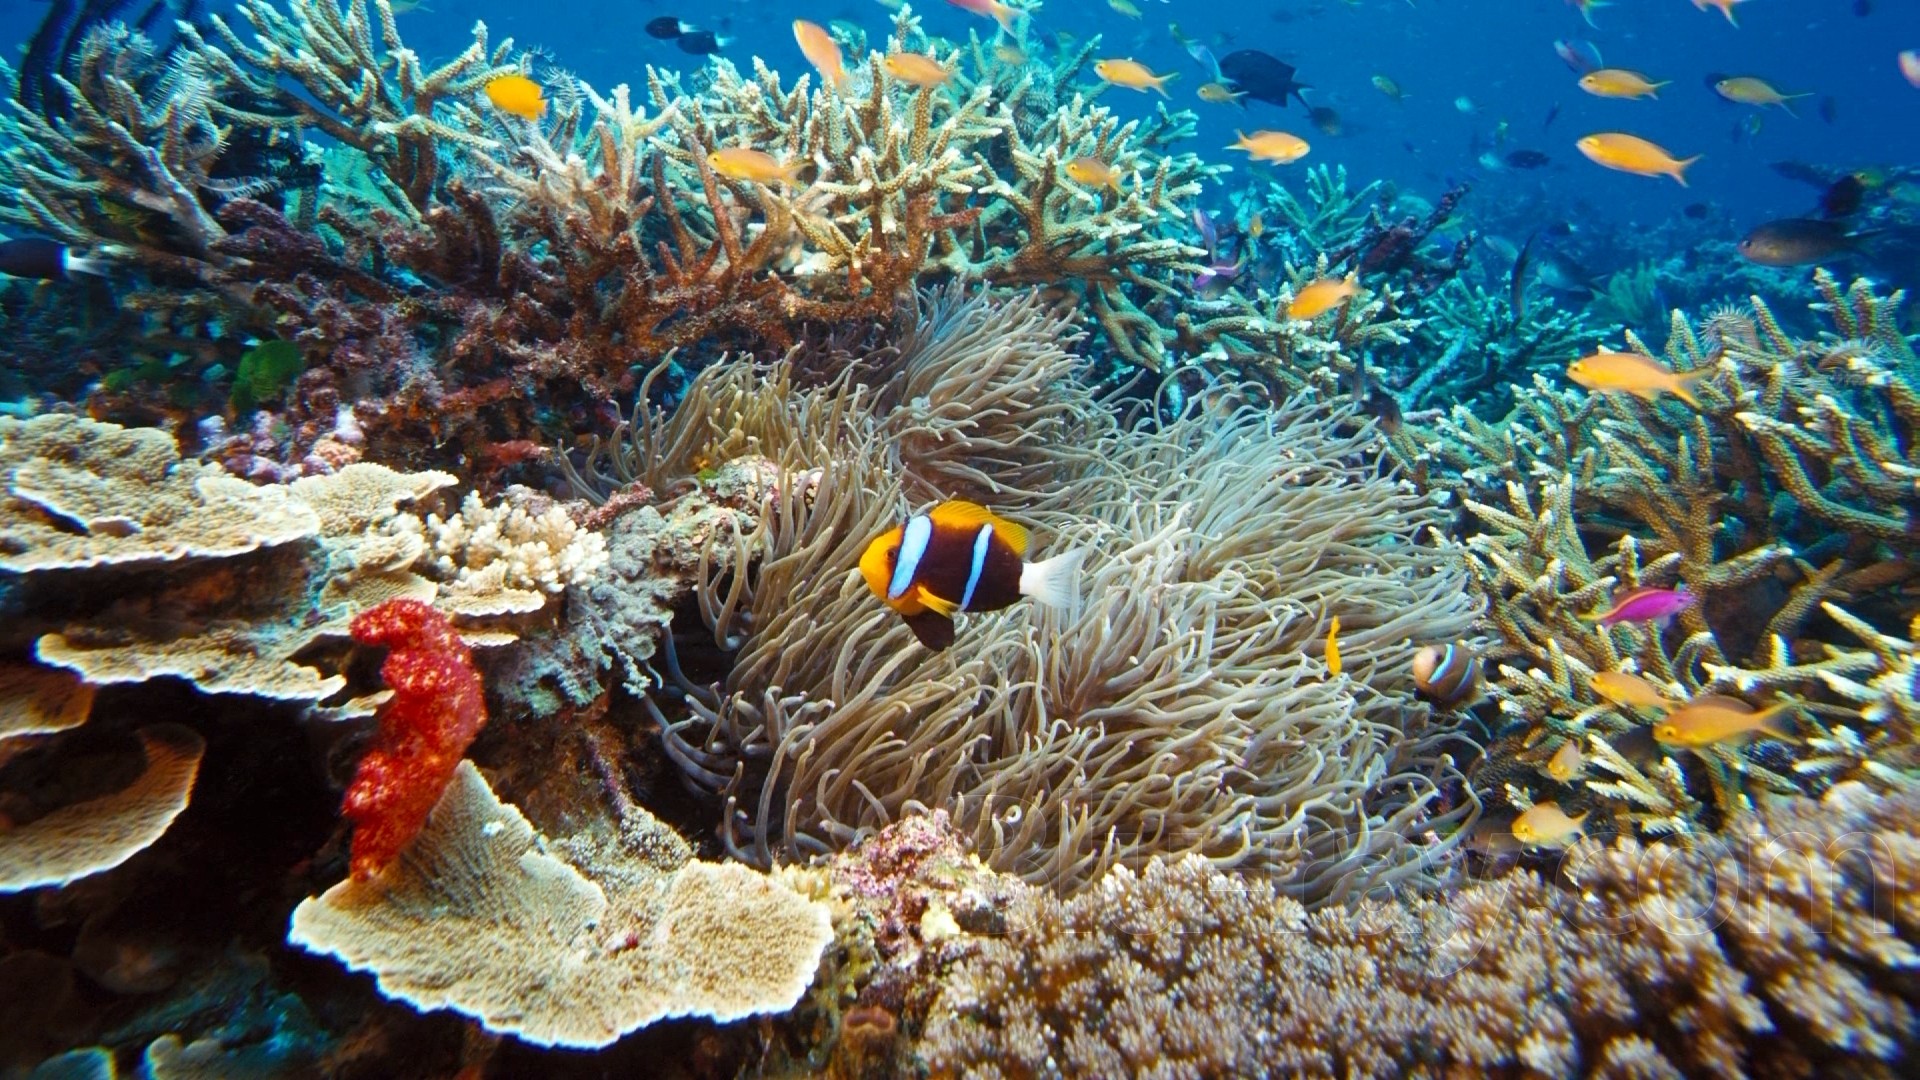 Imax Under The Sea Clownfish HD Image Movies